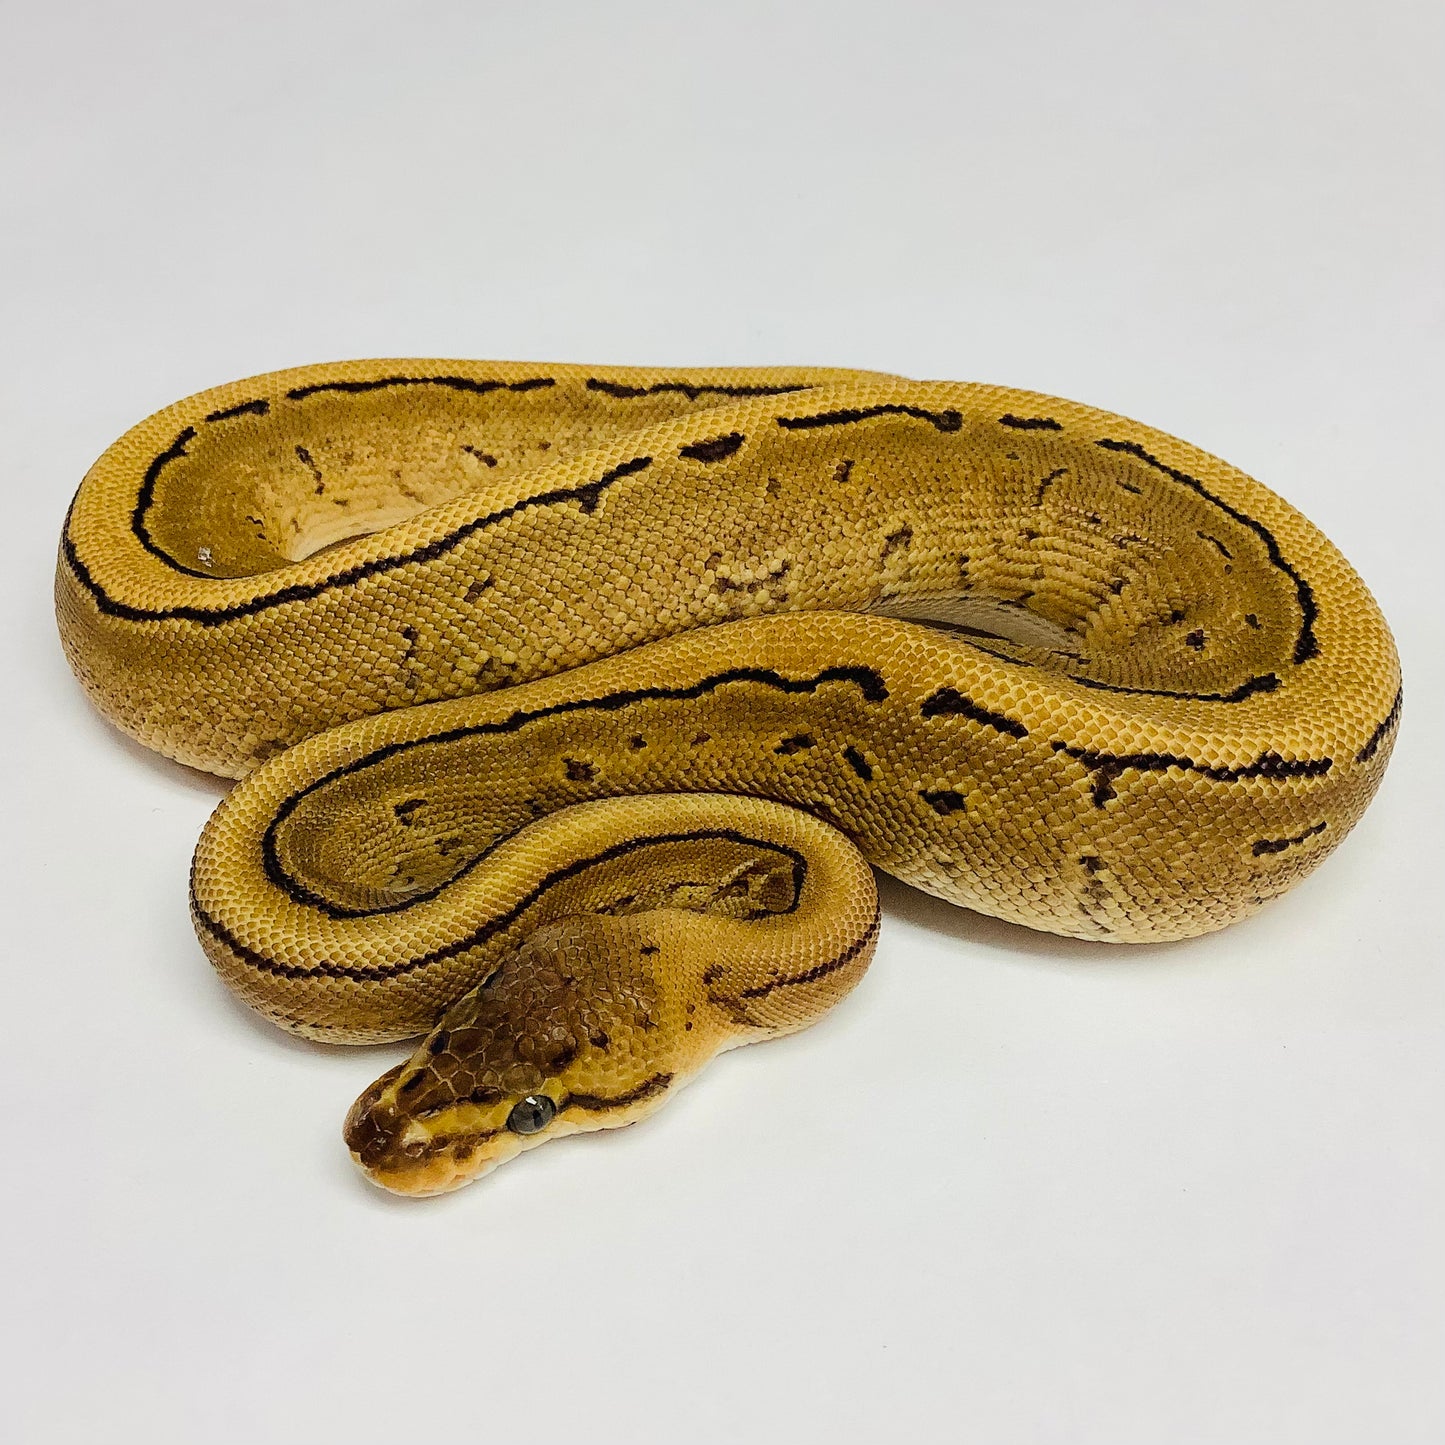 Calico Pinstripe Yellowbelly Ball Python- Female #2022F01